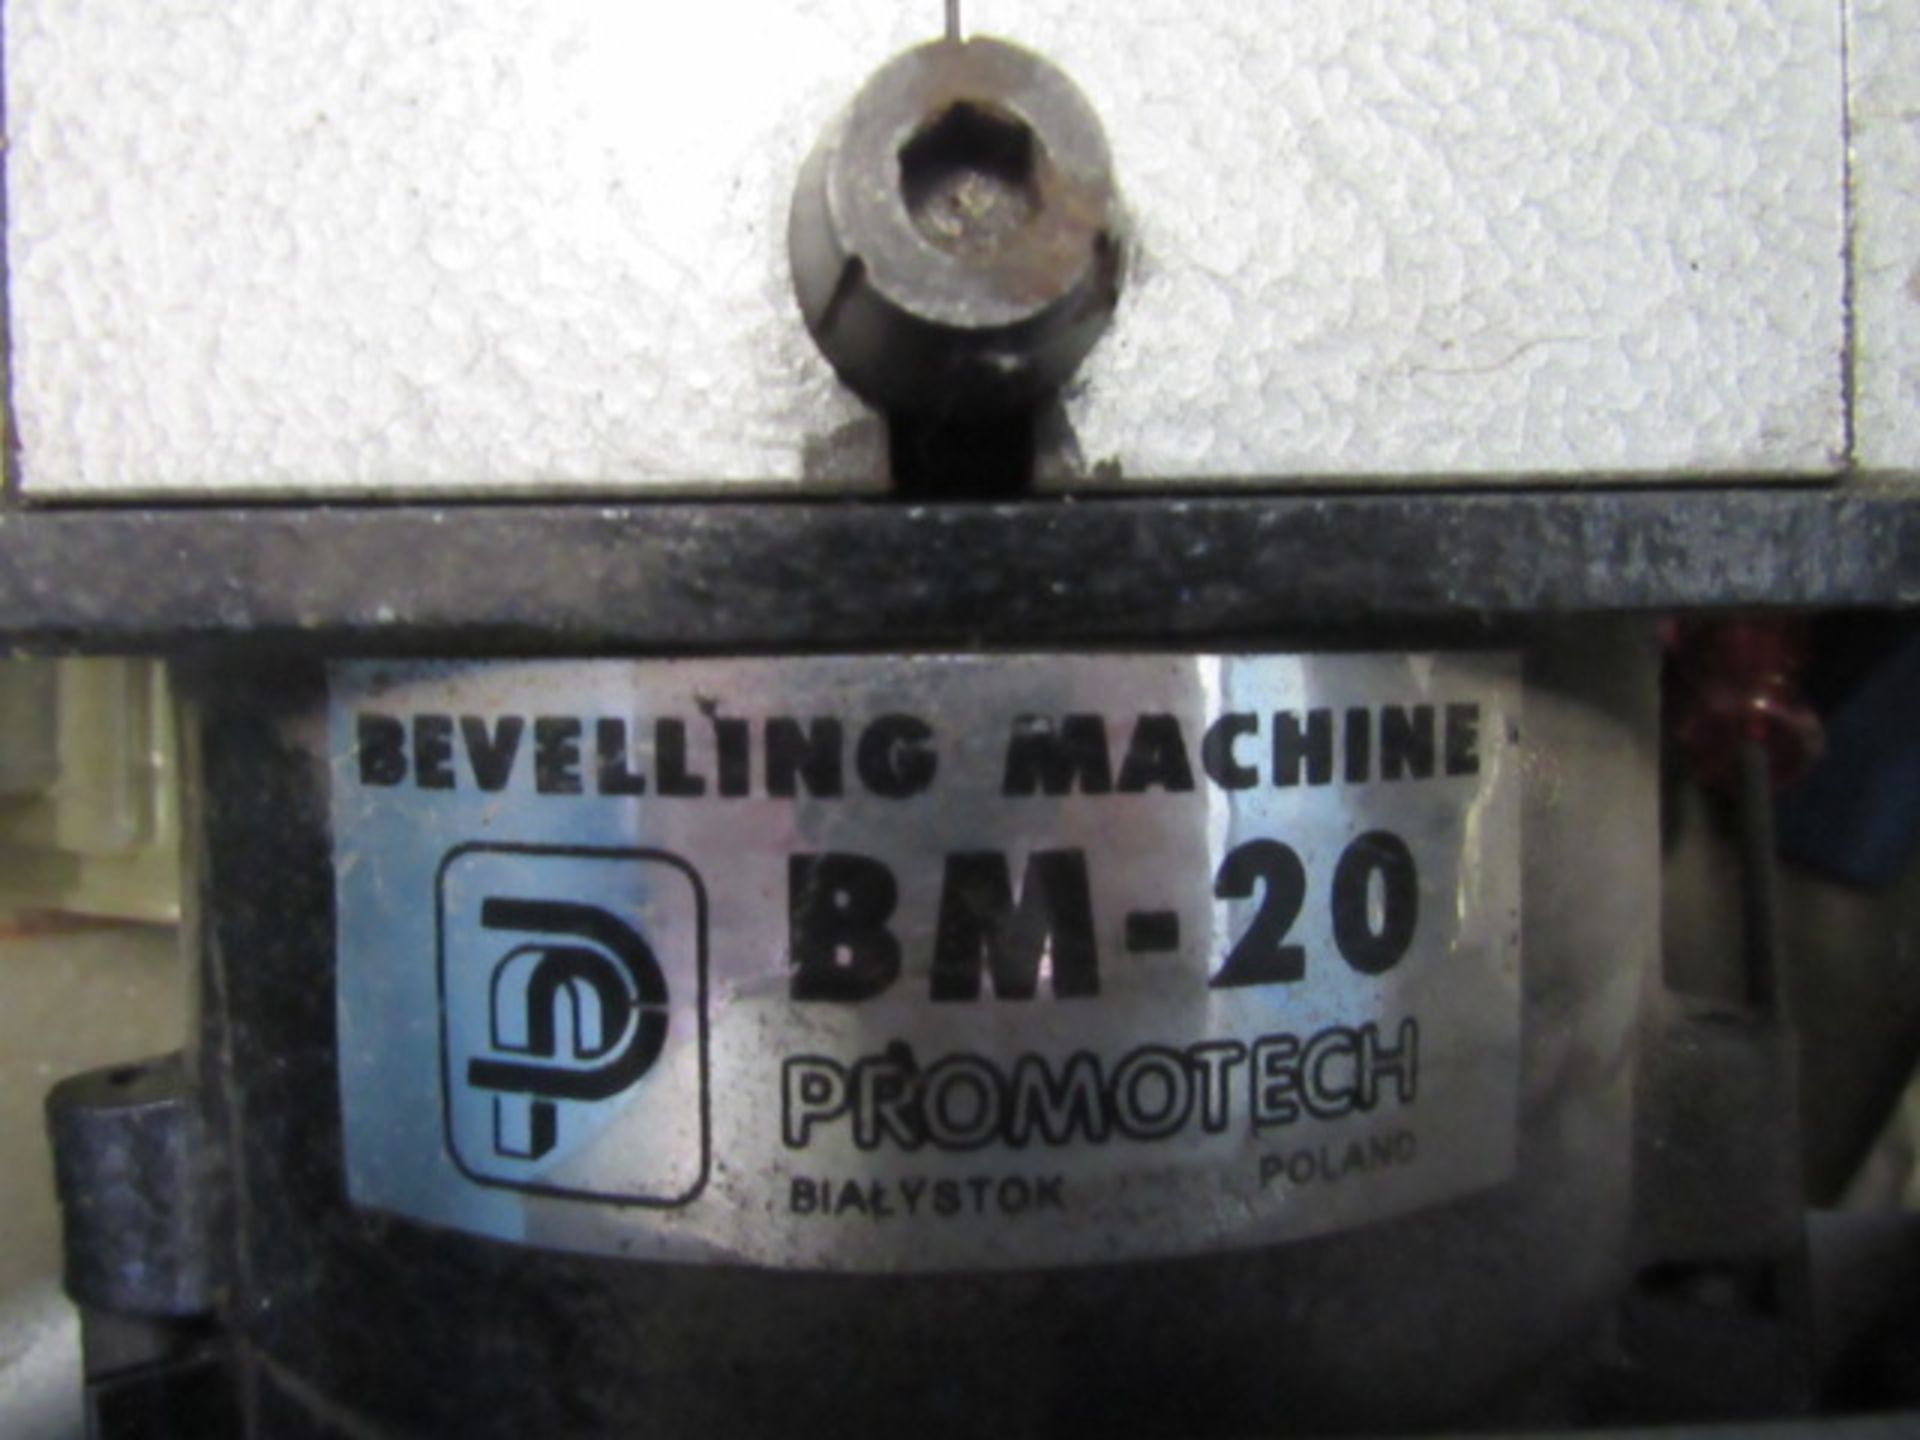 Promotech BM-20 Beveling Machine - Bild 3 aus 3